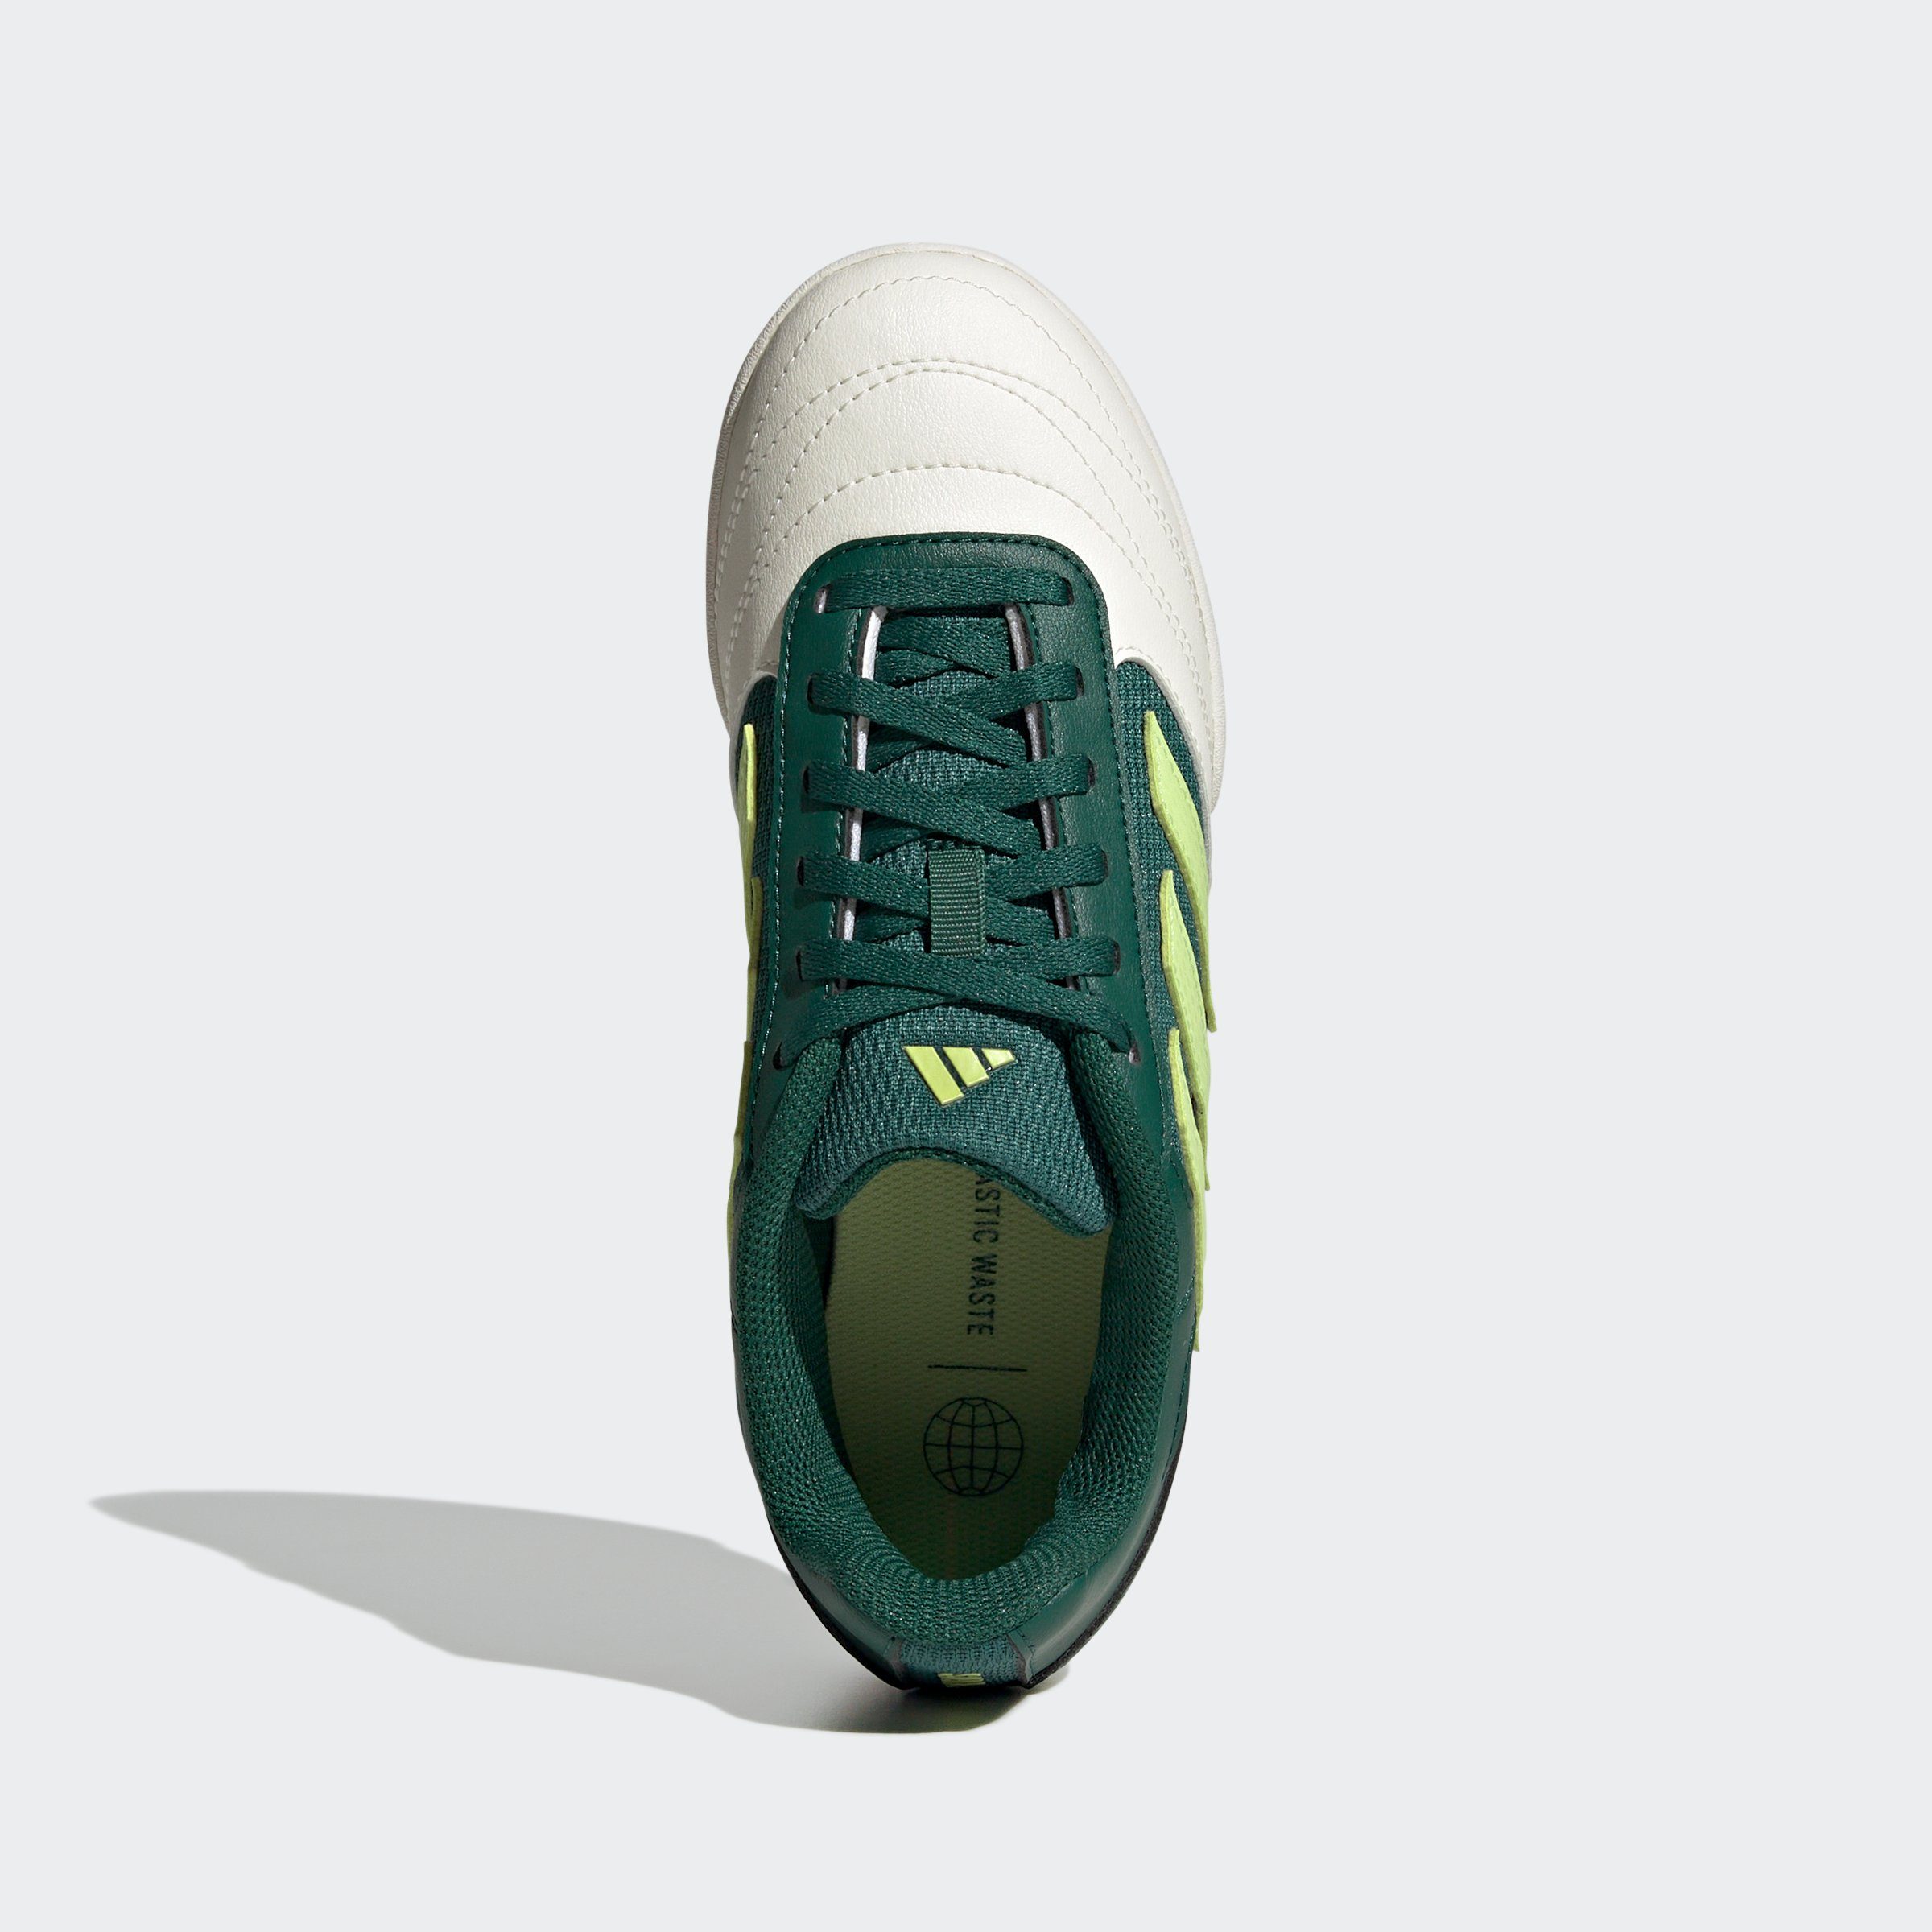 White / IN Lime SALA SUPER 2 Fußballschuh / Pulse Performance adidas Off Collegiate Green